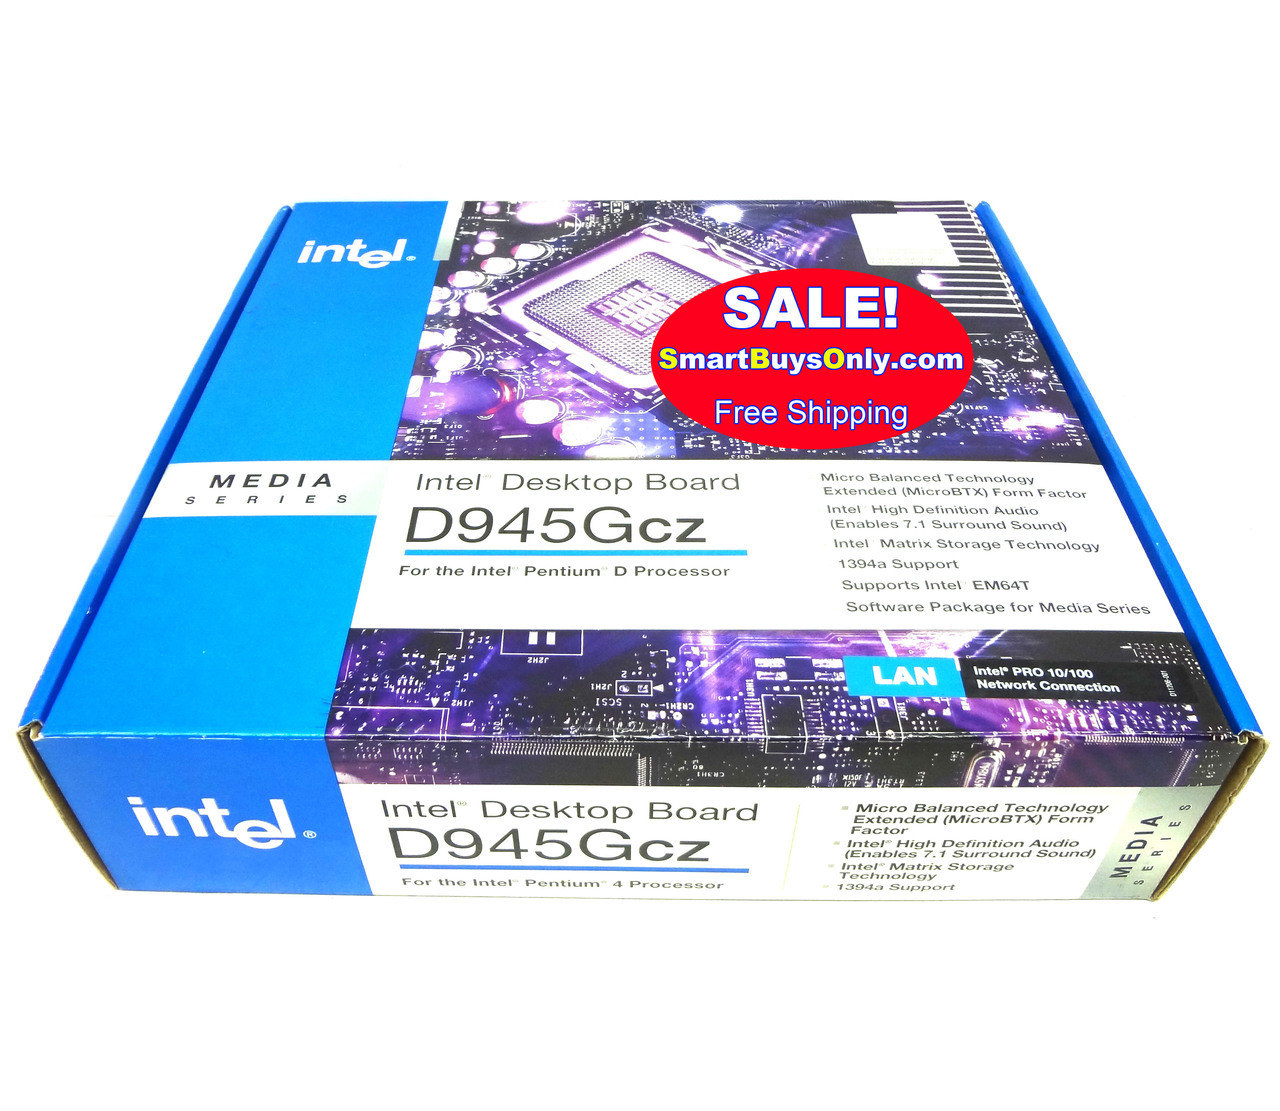 Intel D945Gcz Desktop Motherboard for Pentium D processor